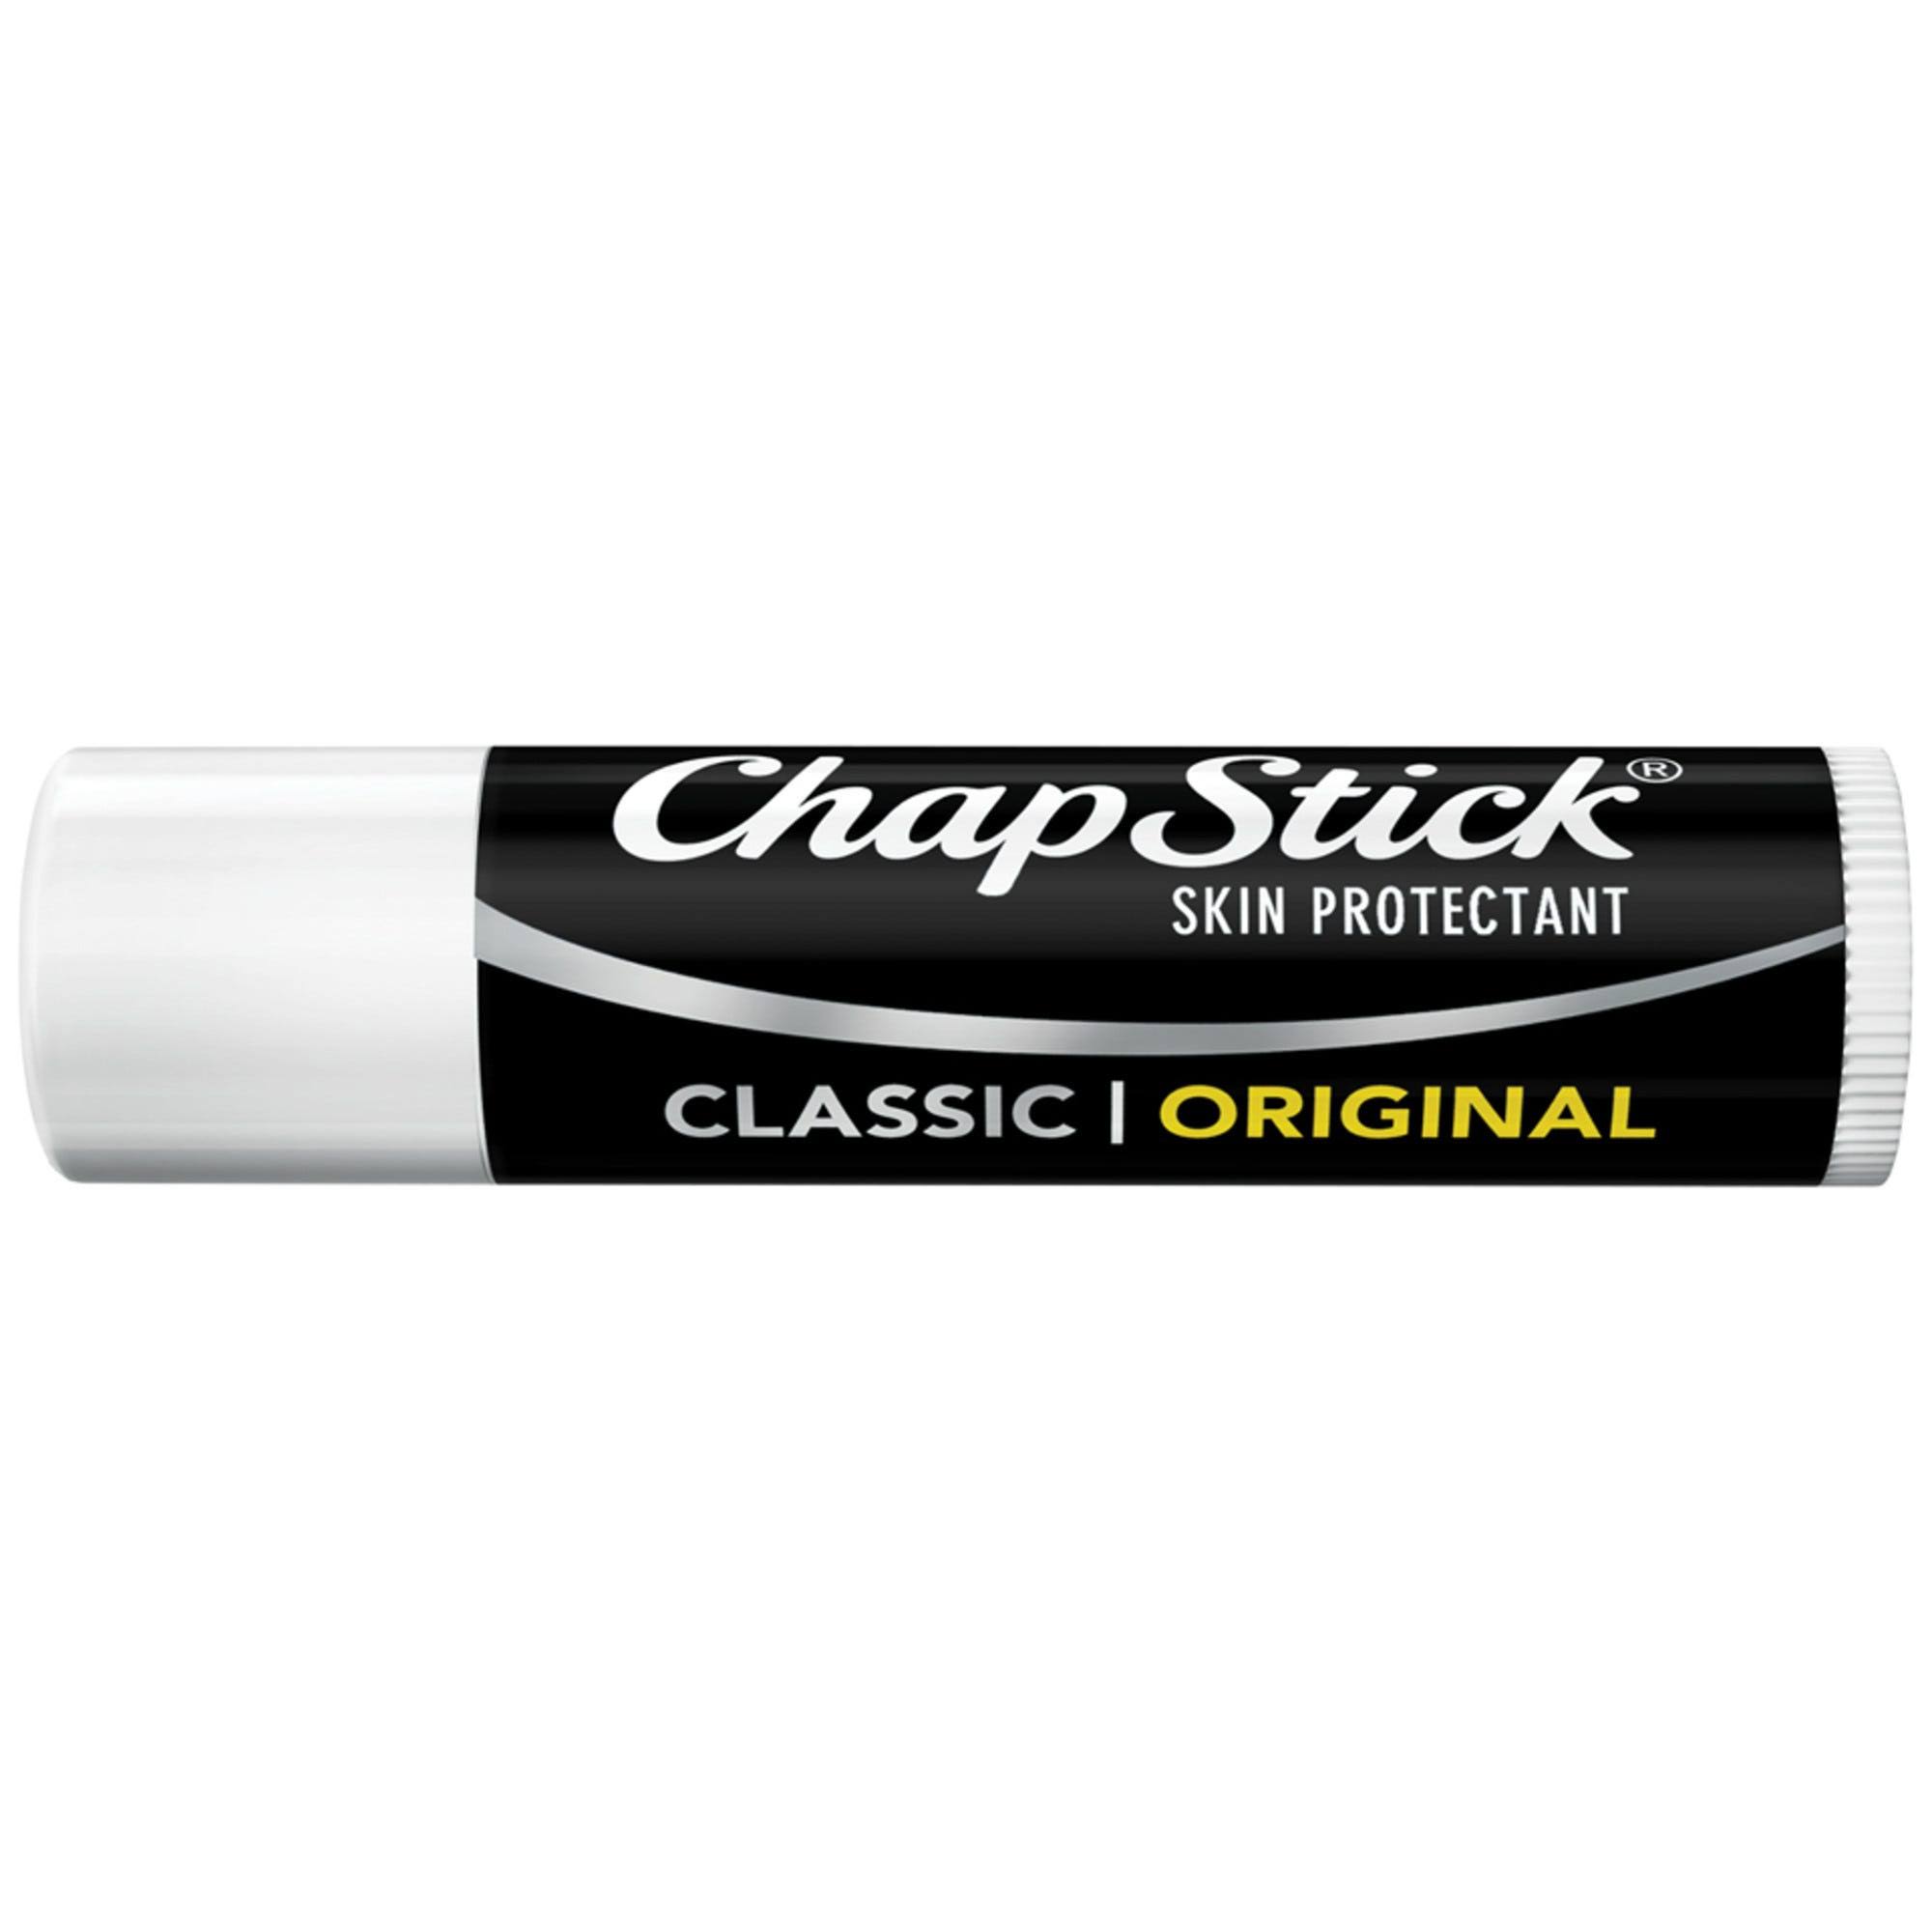 Chapstick Skin Protectant, Classic, Original - 0.15 oz